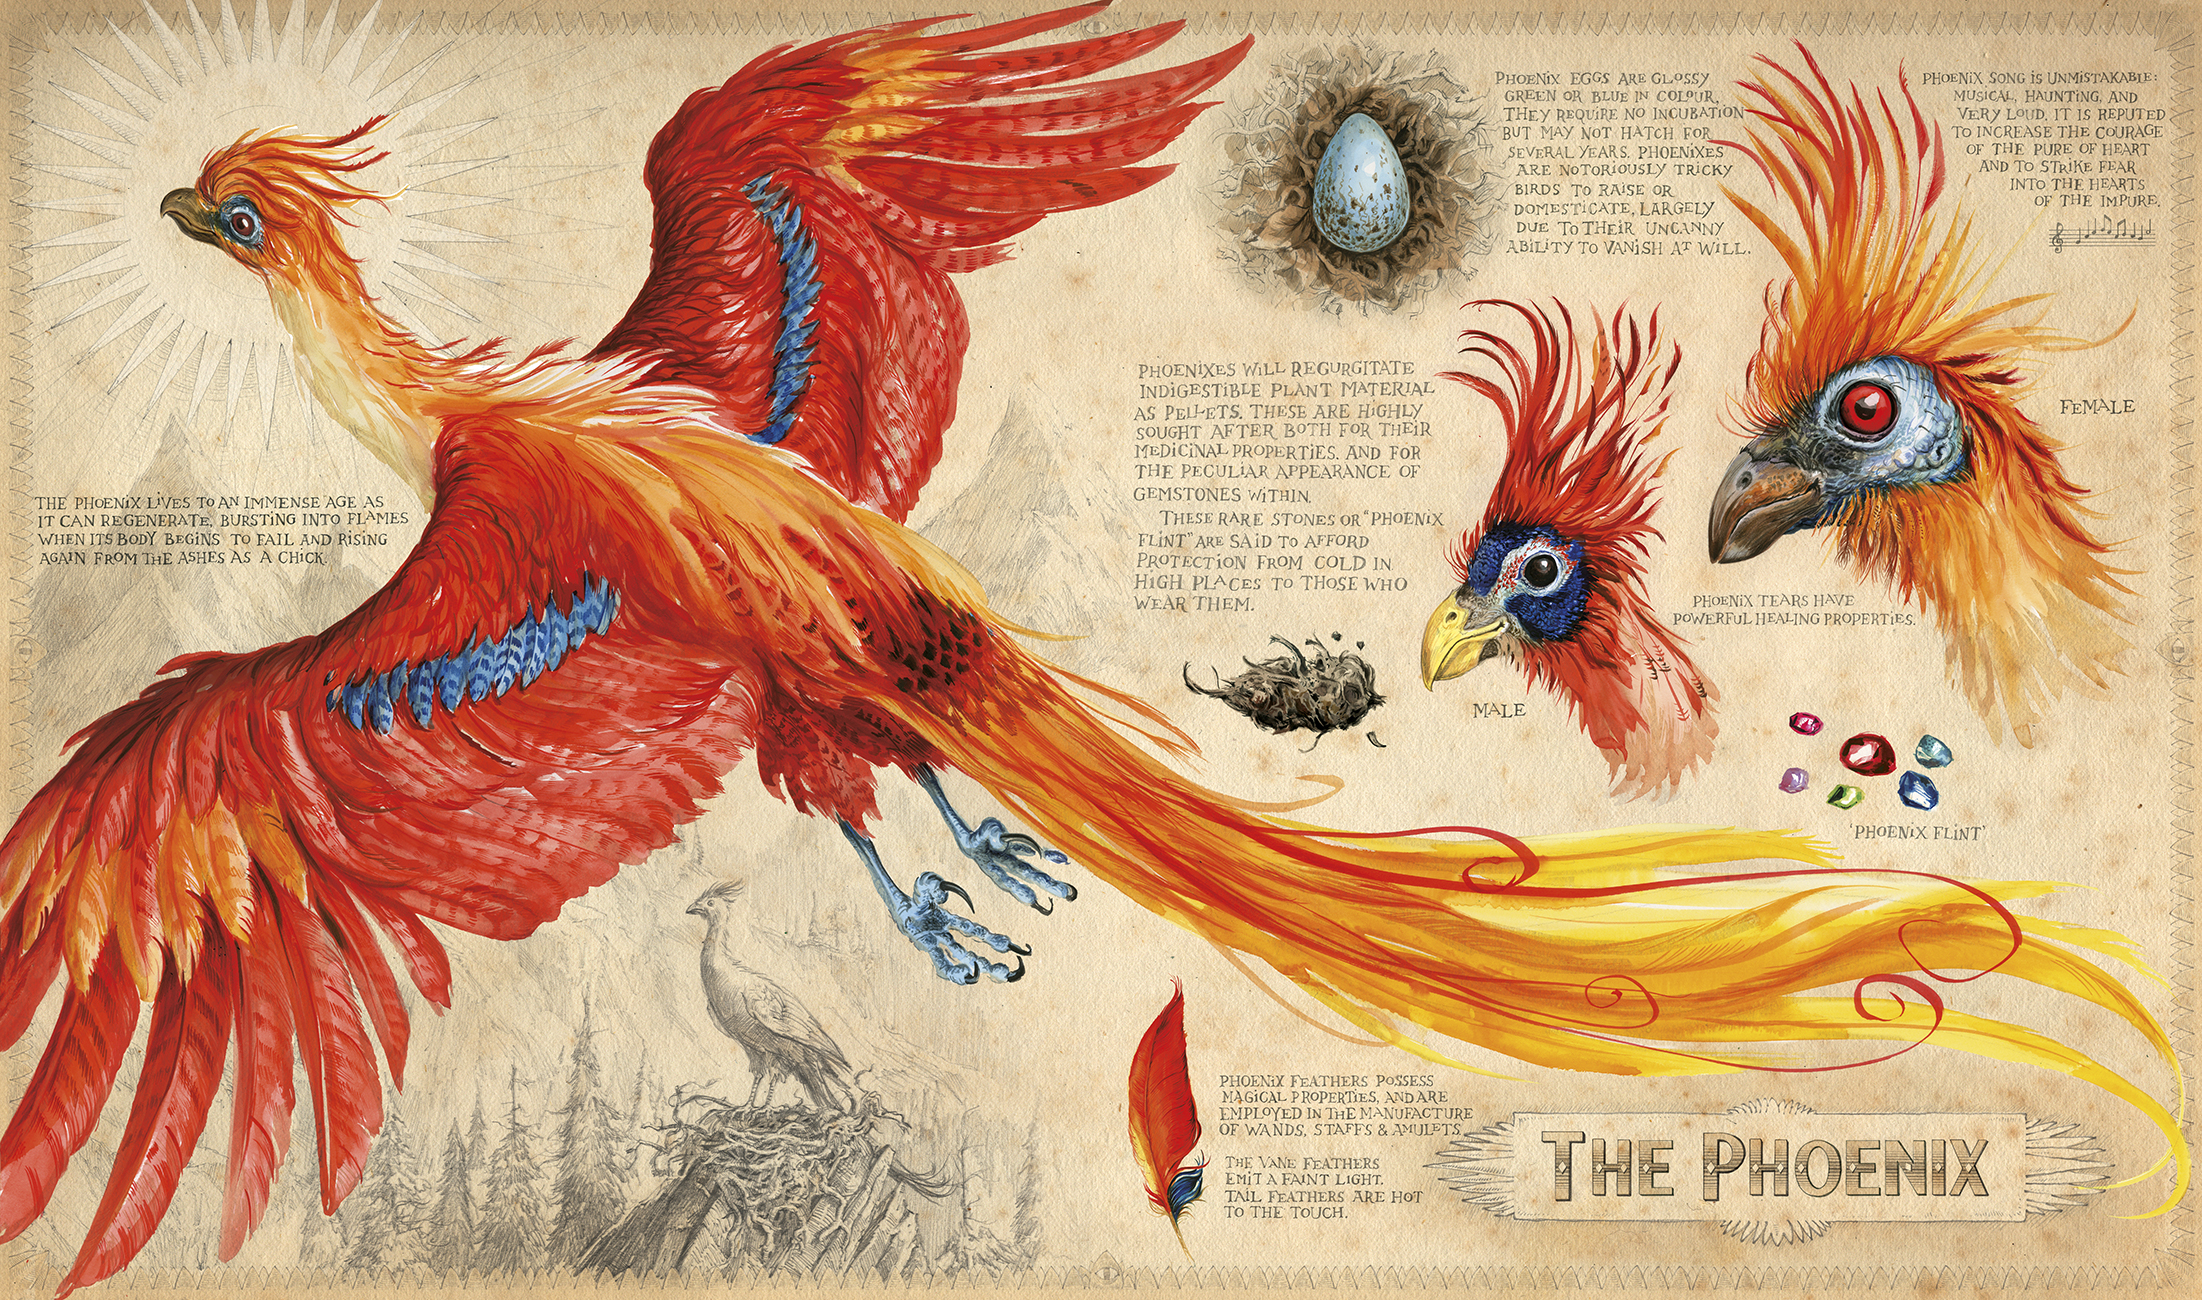 Pottermore: A first look inside Harry Potter's digital world, Children's  books